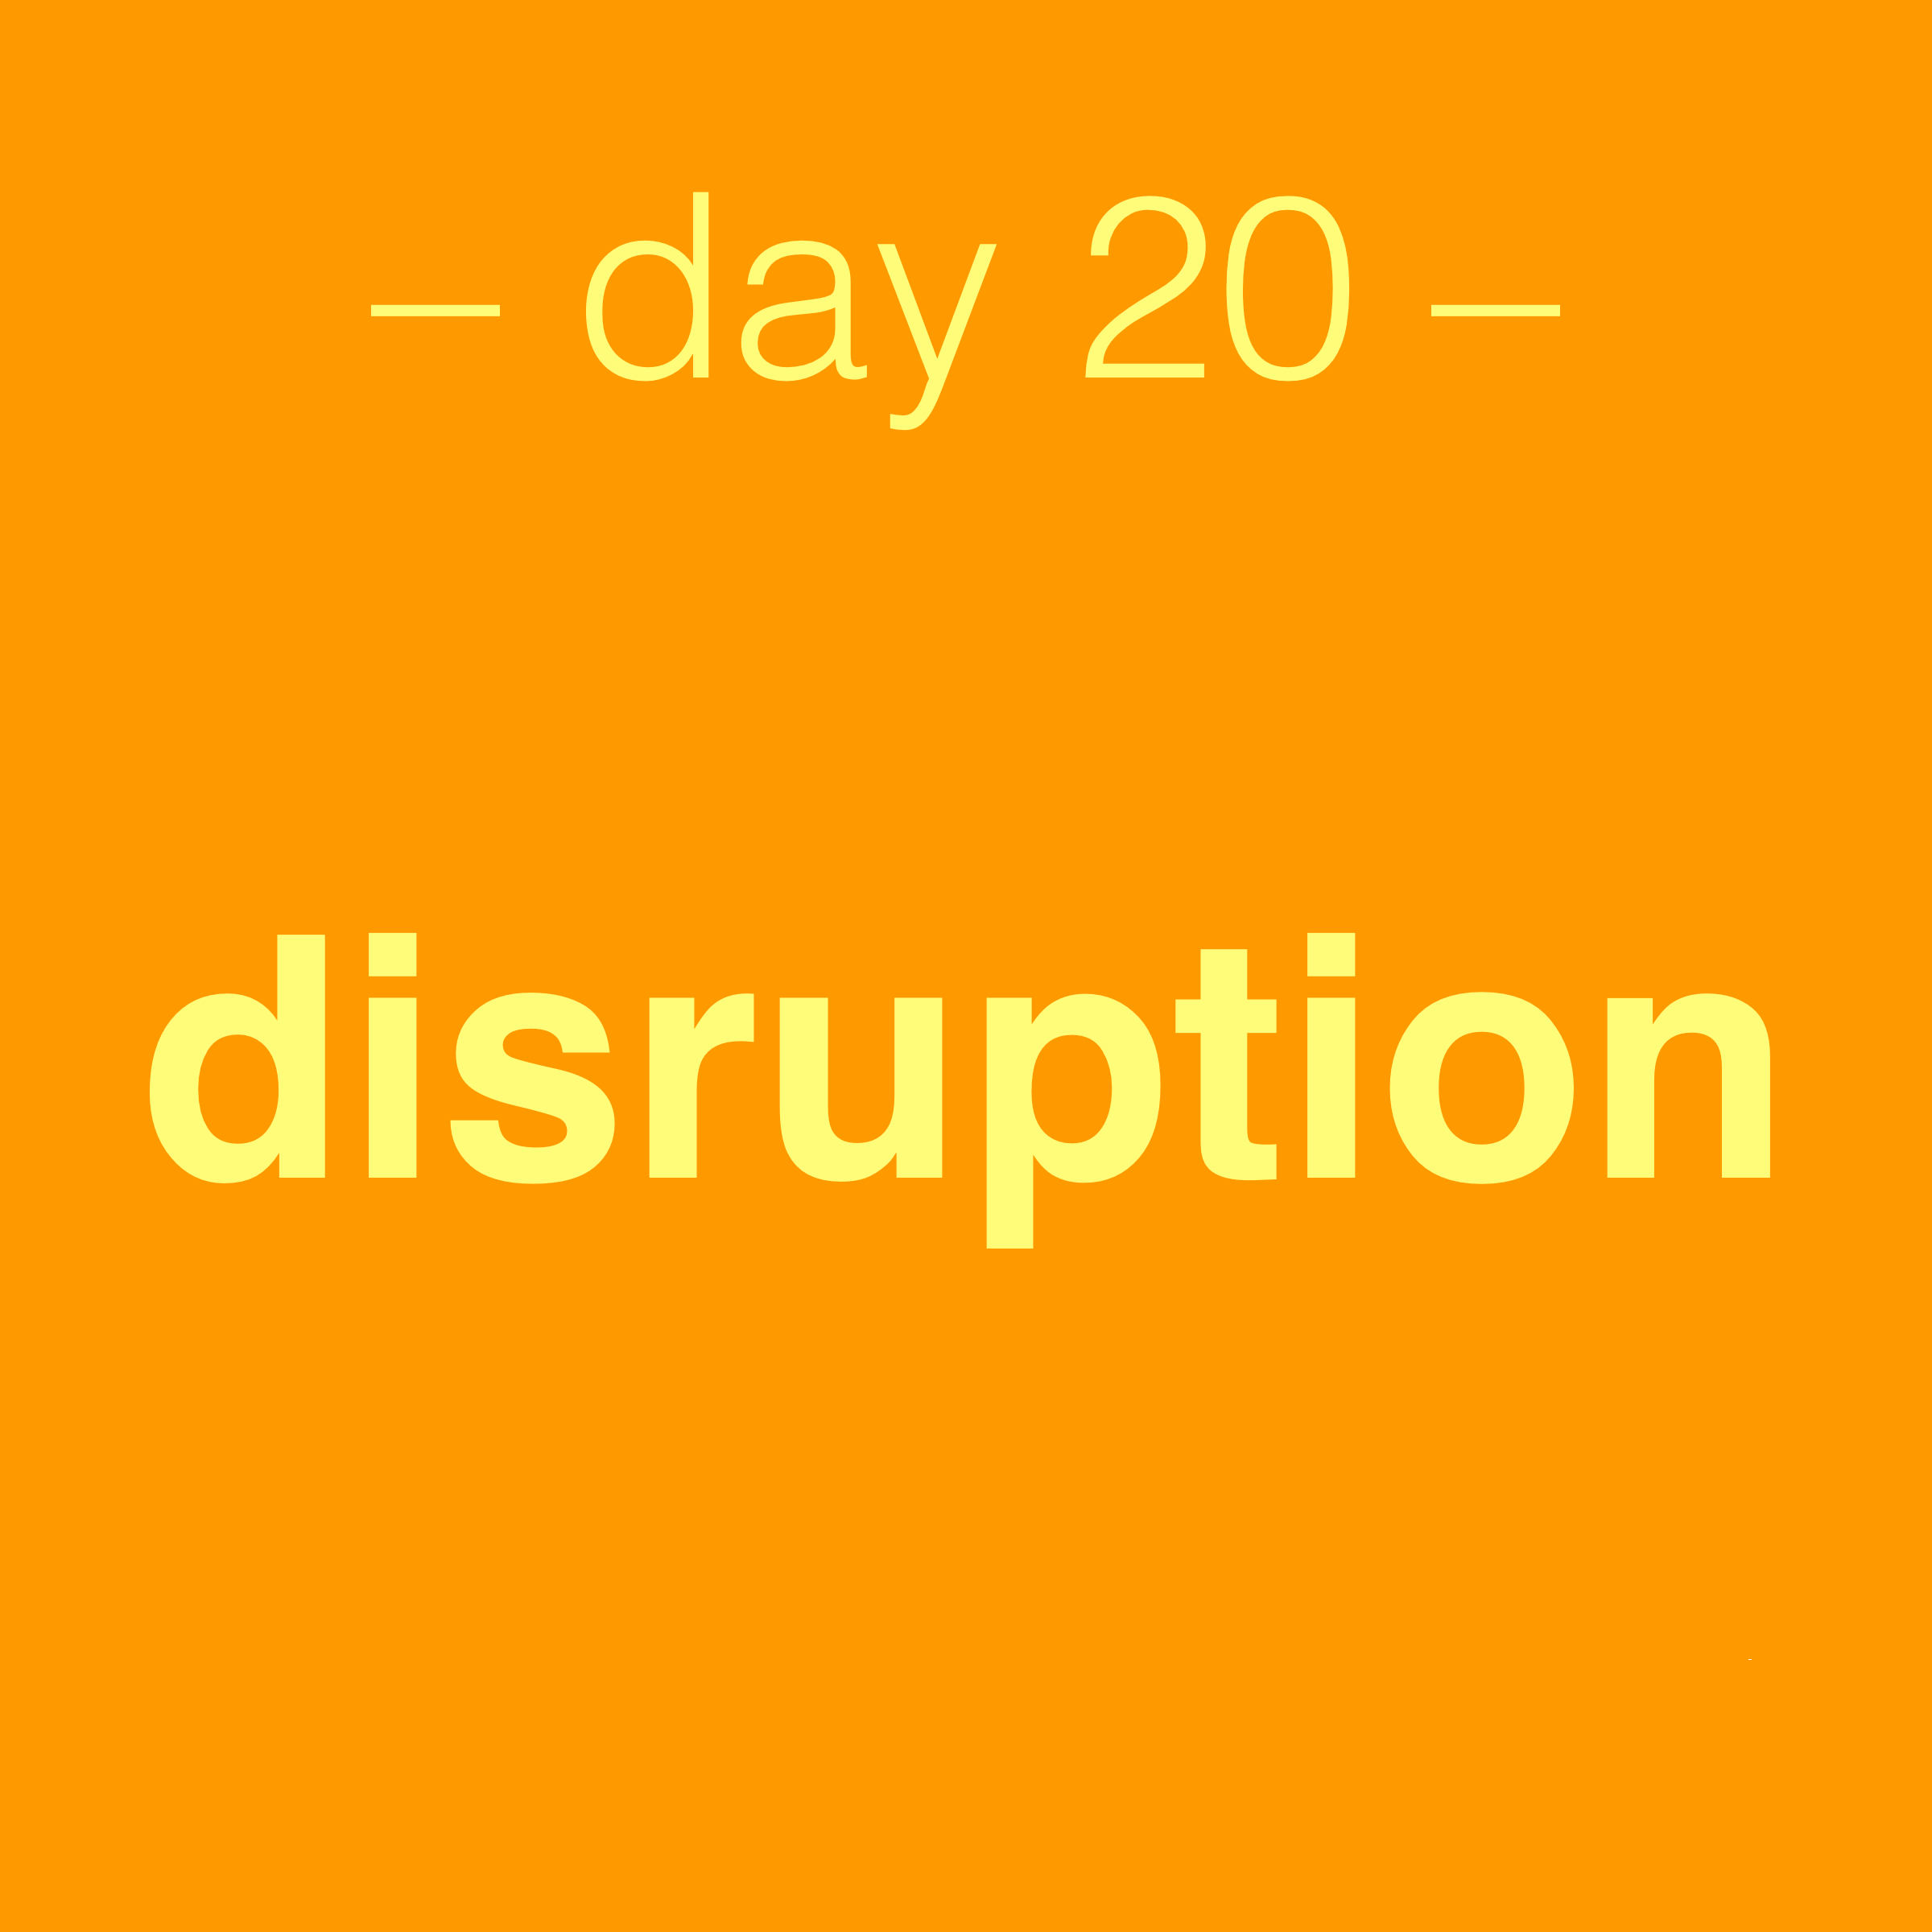 day 20-disruption